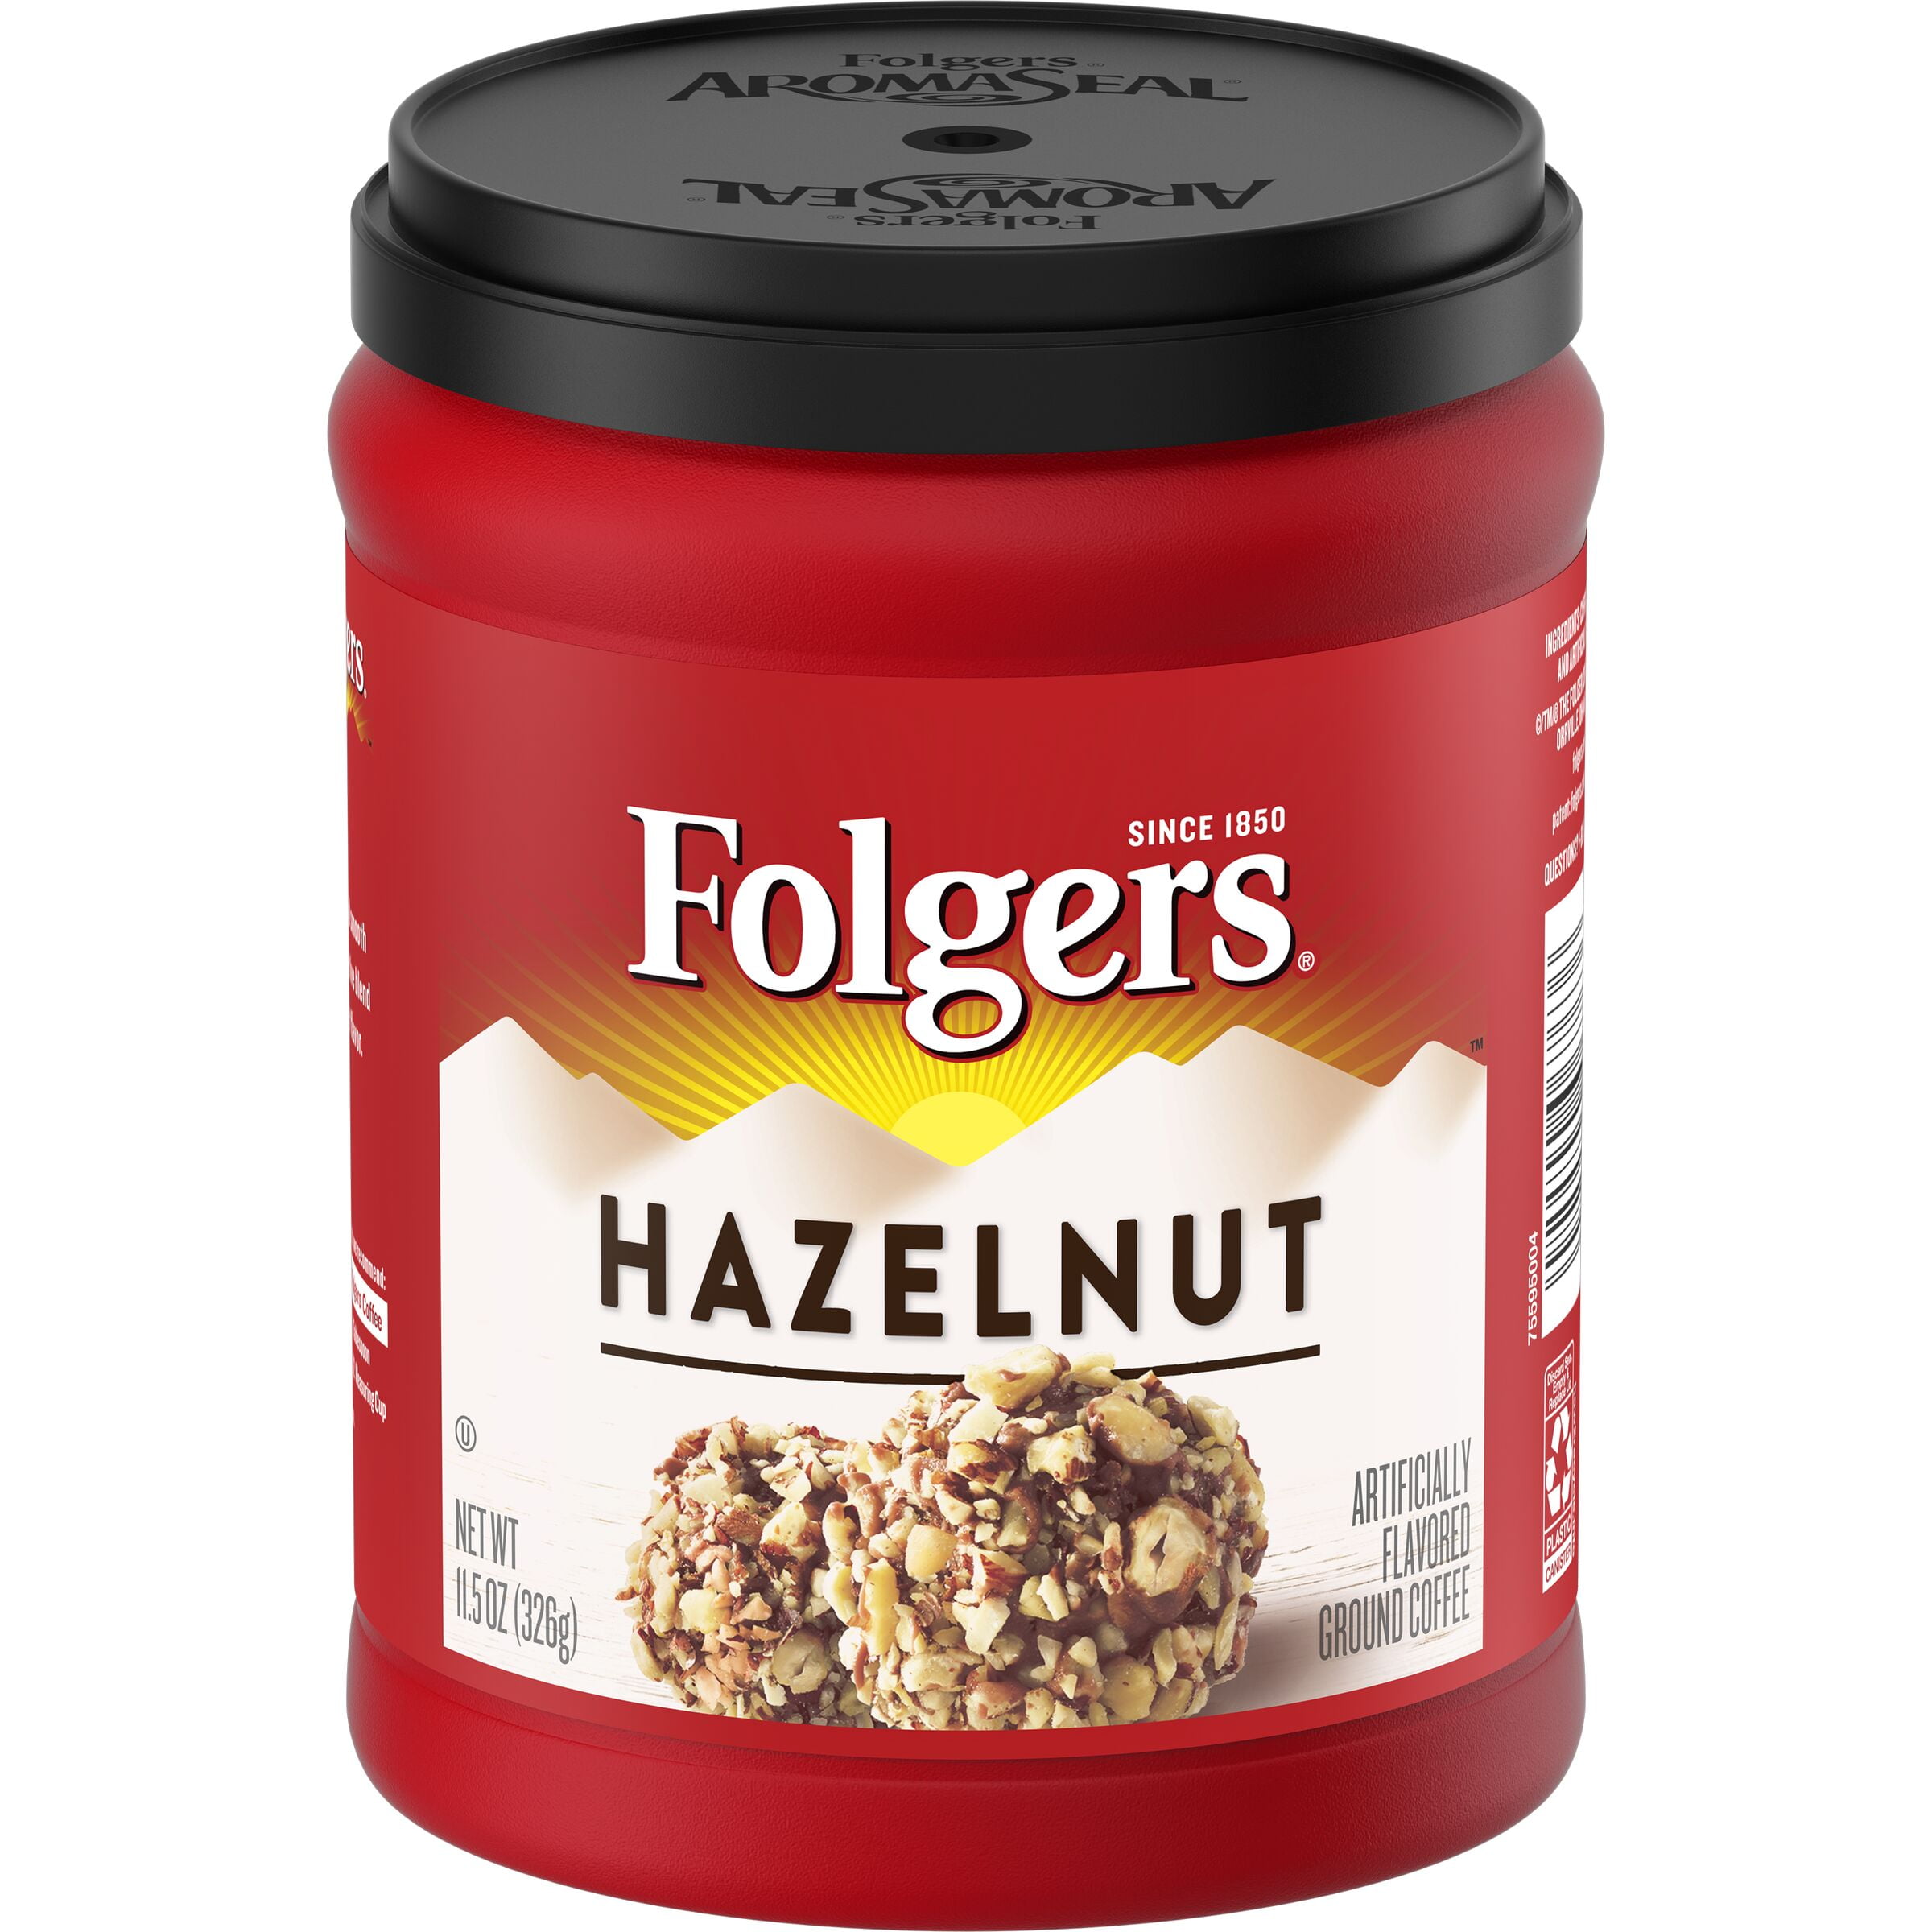 Folgers Hazelnut Ground Coffee, 11.5-Ounce